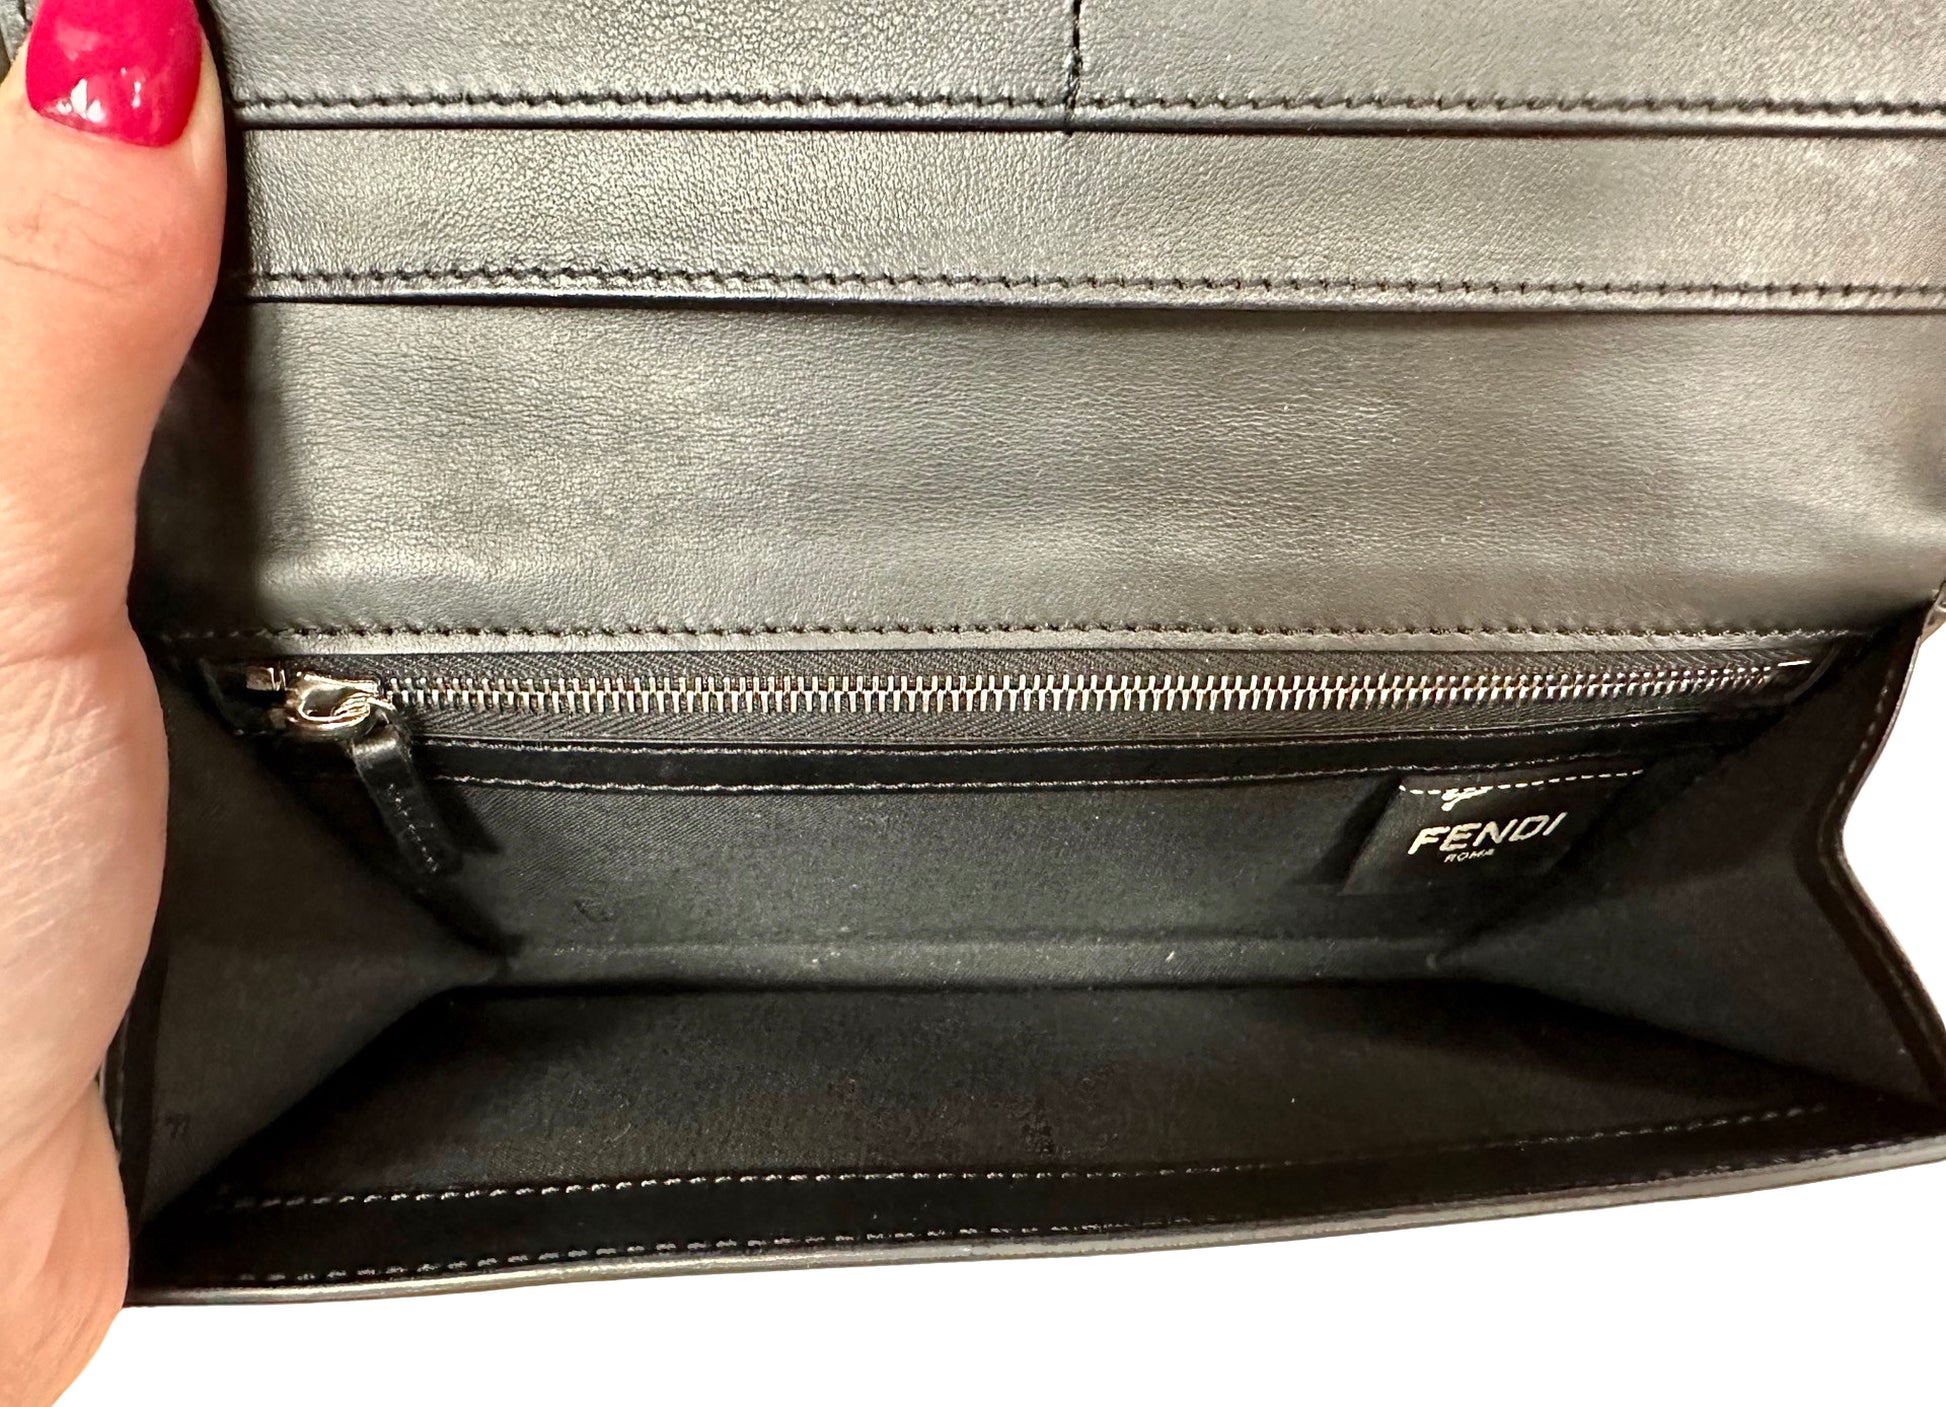 Big inner pocket of wallet with zip pocket + fendi tag